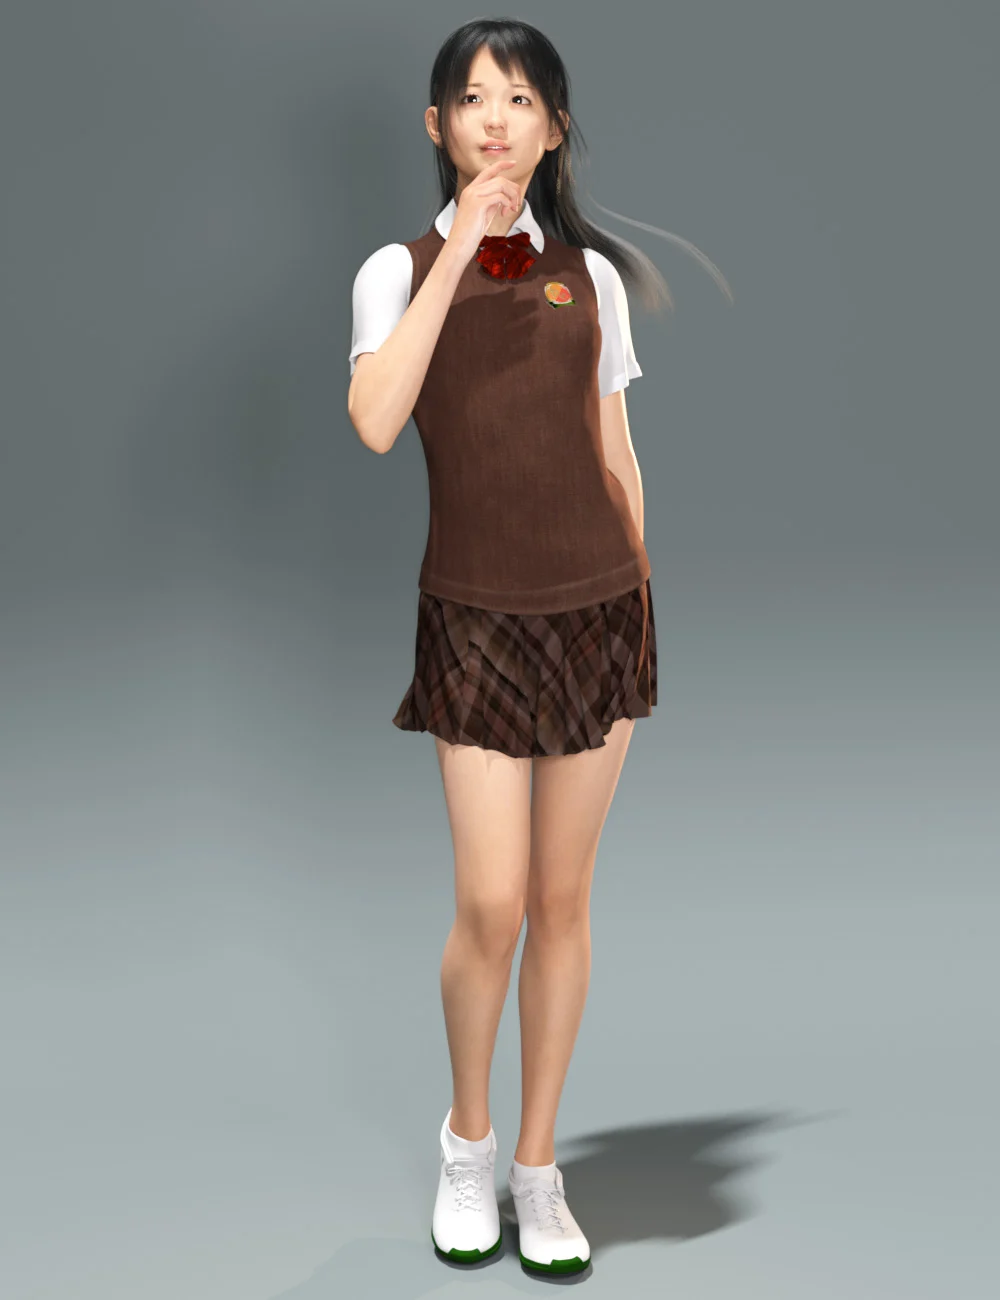 dForce Spring School Uniform for Genesis 8 and 8.1 Females_DAZ3DDL